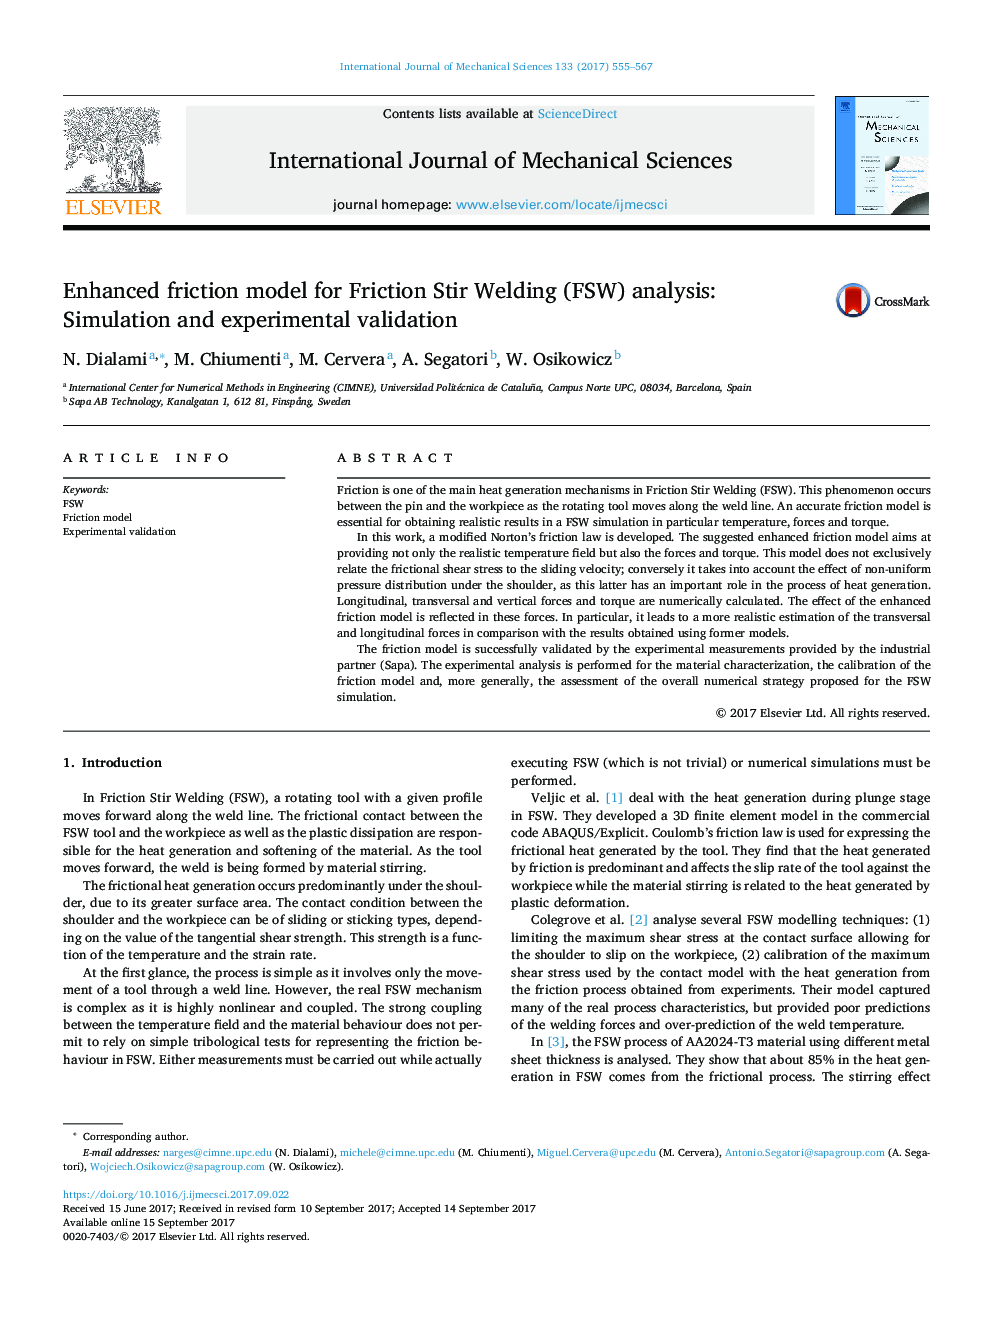 Enhanced friction model for Friction Stir Welding (FSW) analysis: Simulation and experimental validation